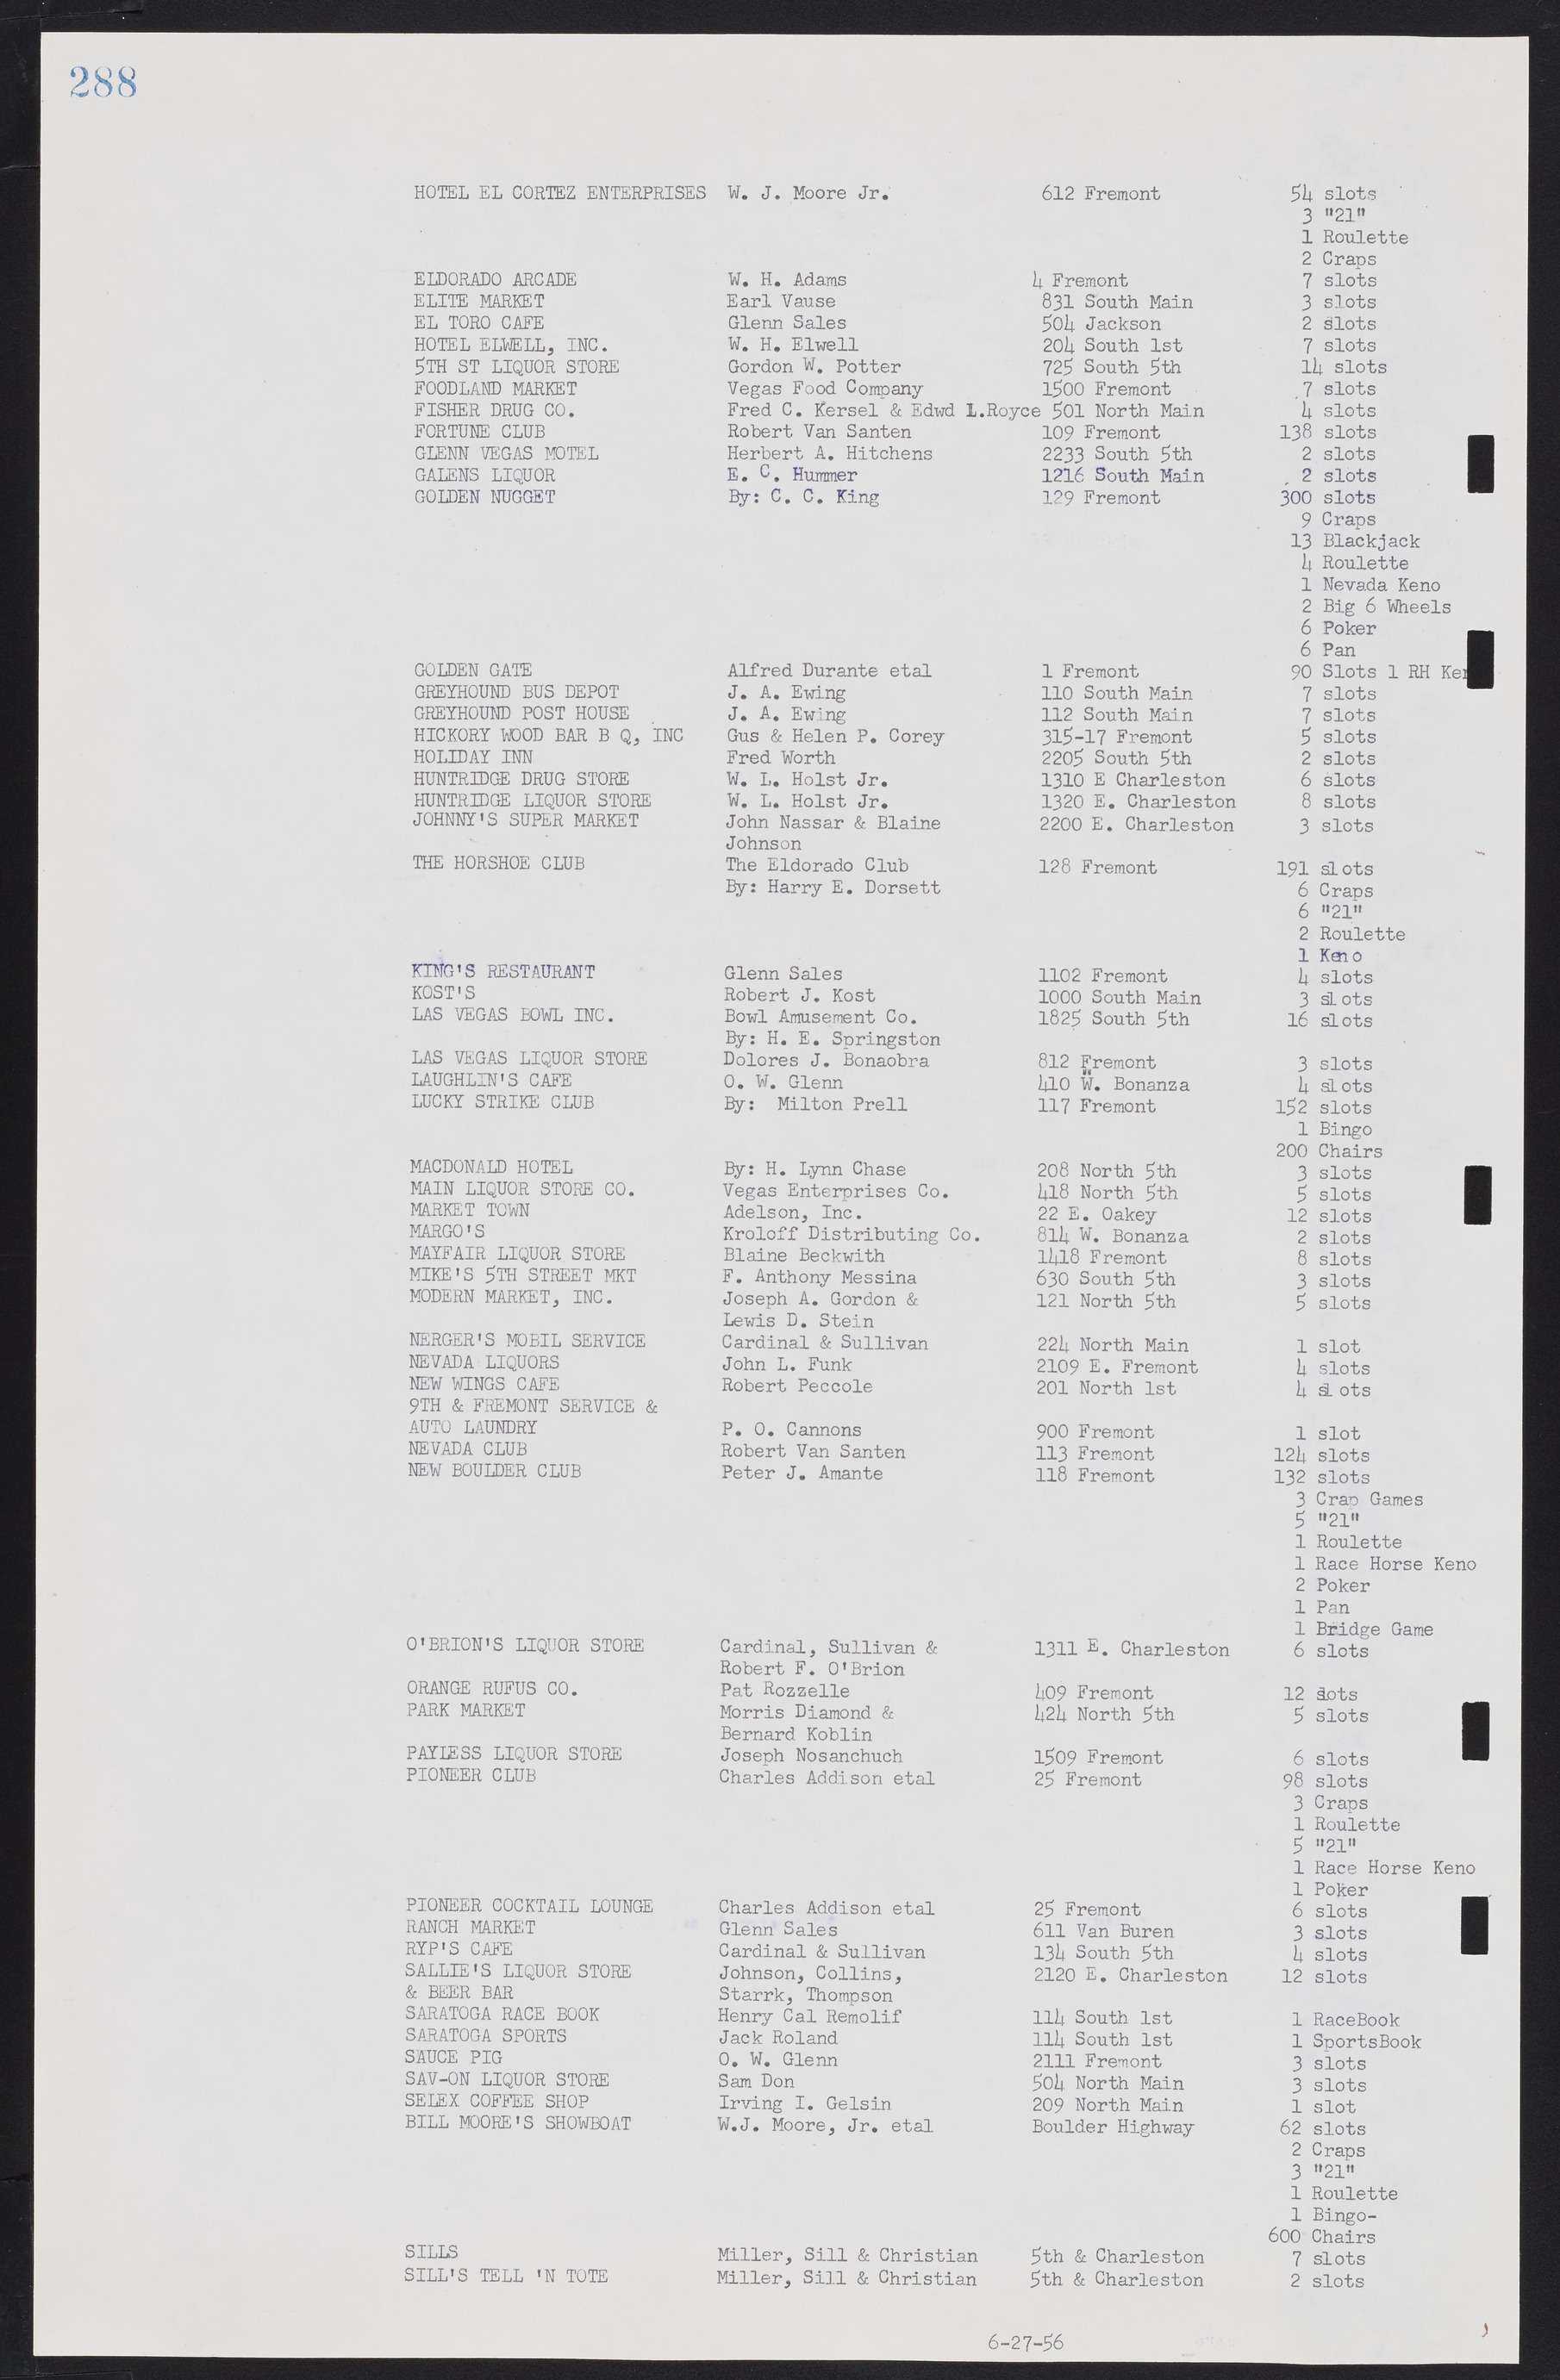 Las Vegas City Commission Minutes, September 21, 1955 to November 20, 1957, lvc000010-308